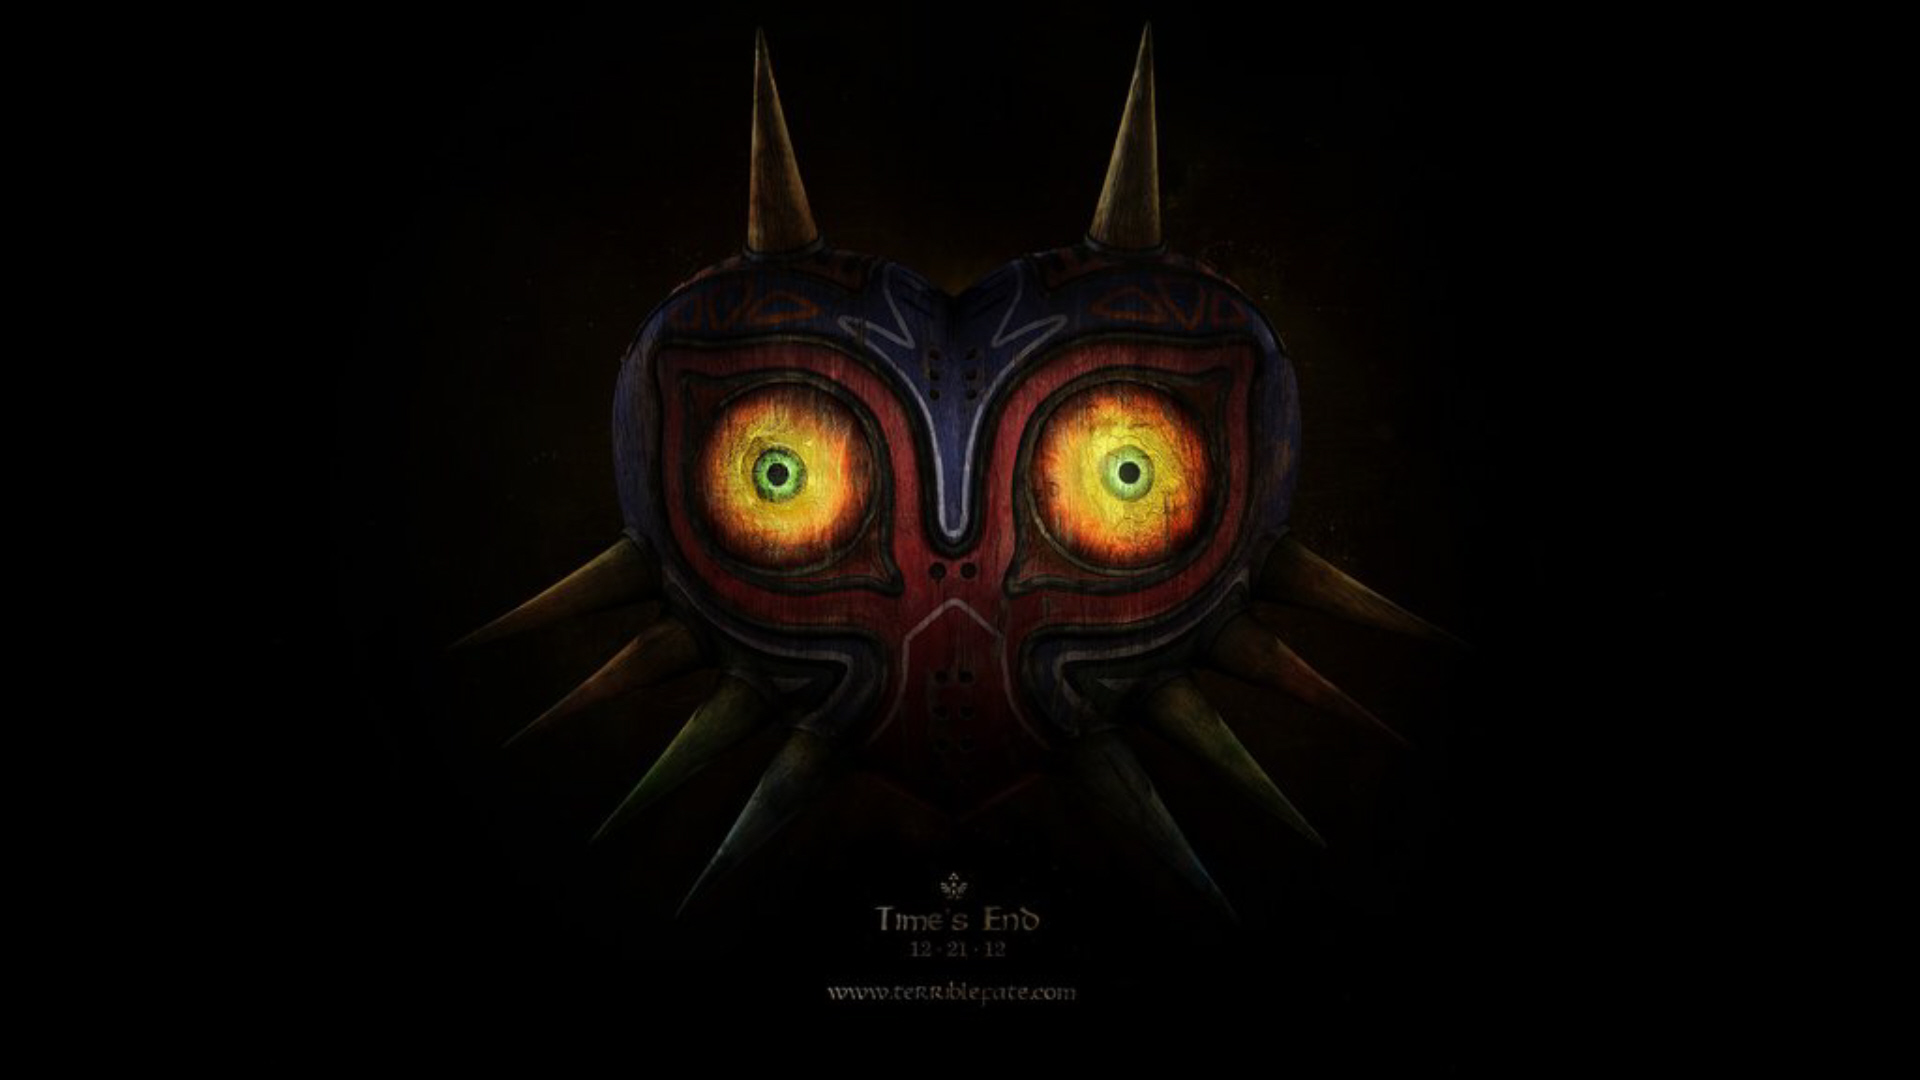 The Legend of Zelda Majora's Mask 3DS Wallpaper by stevenstone89